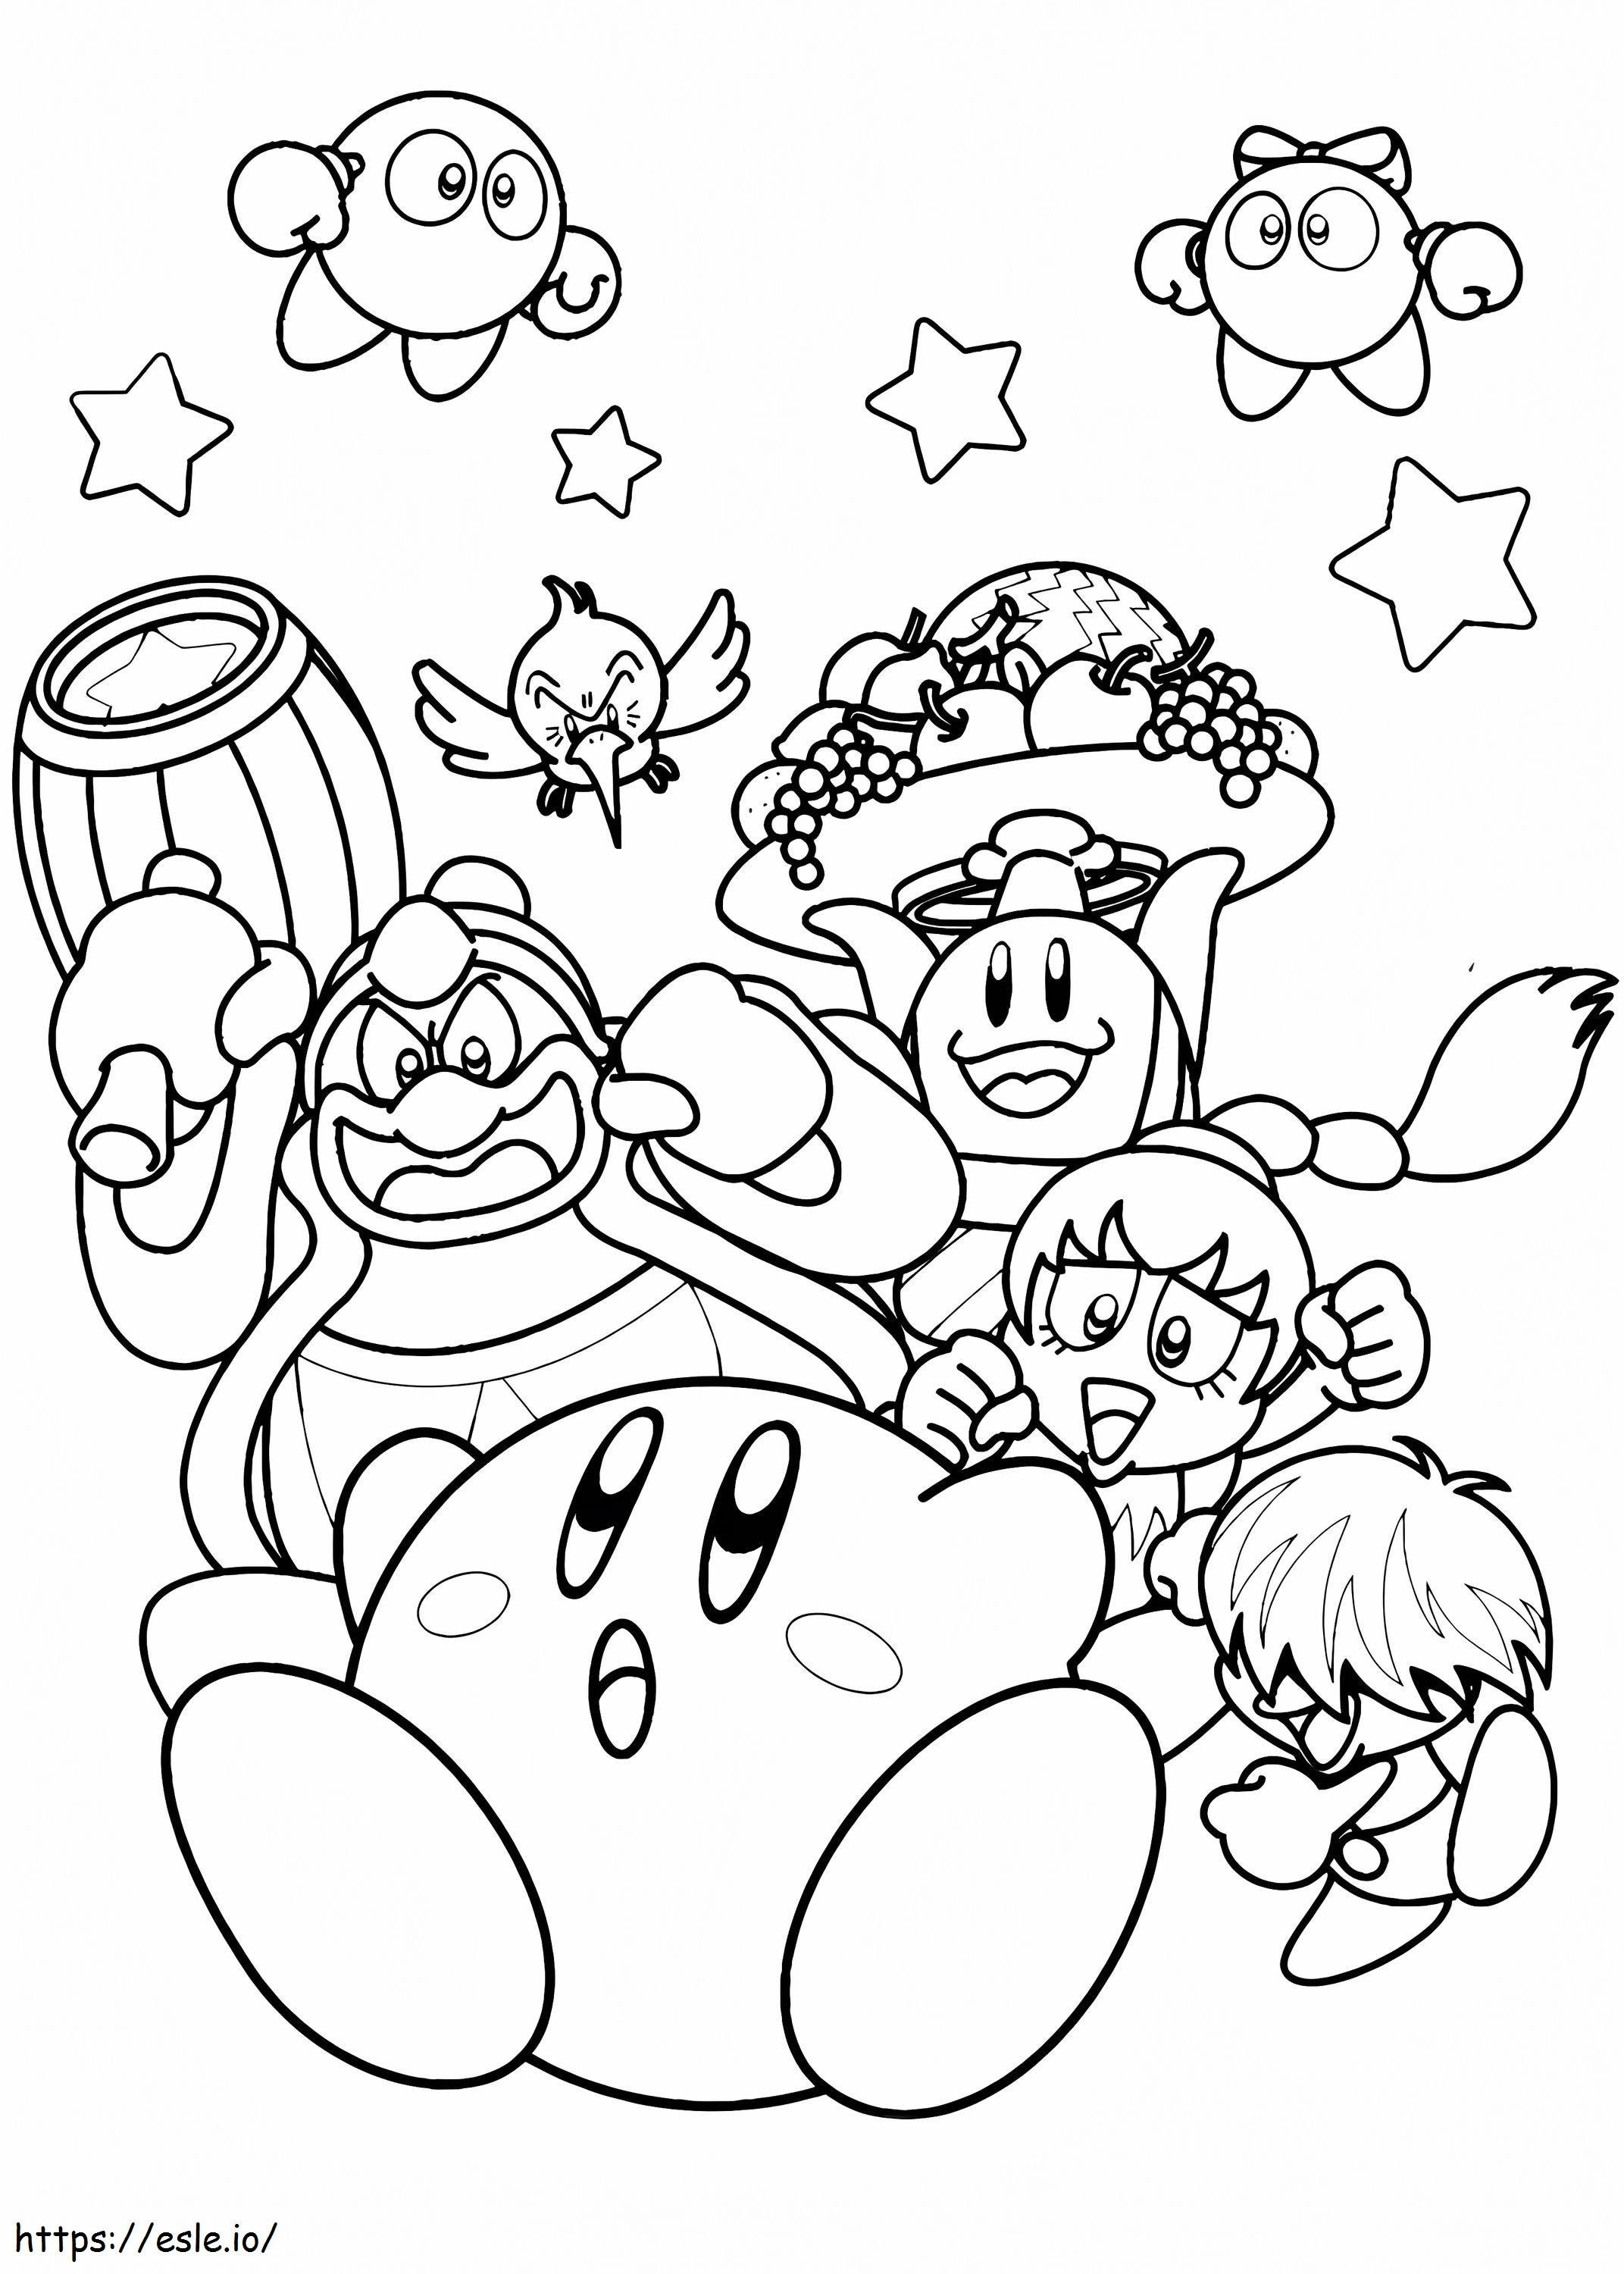 1575687546 Nintendo Kirby värityskuva